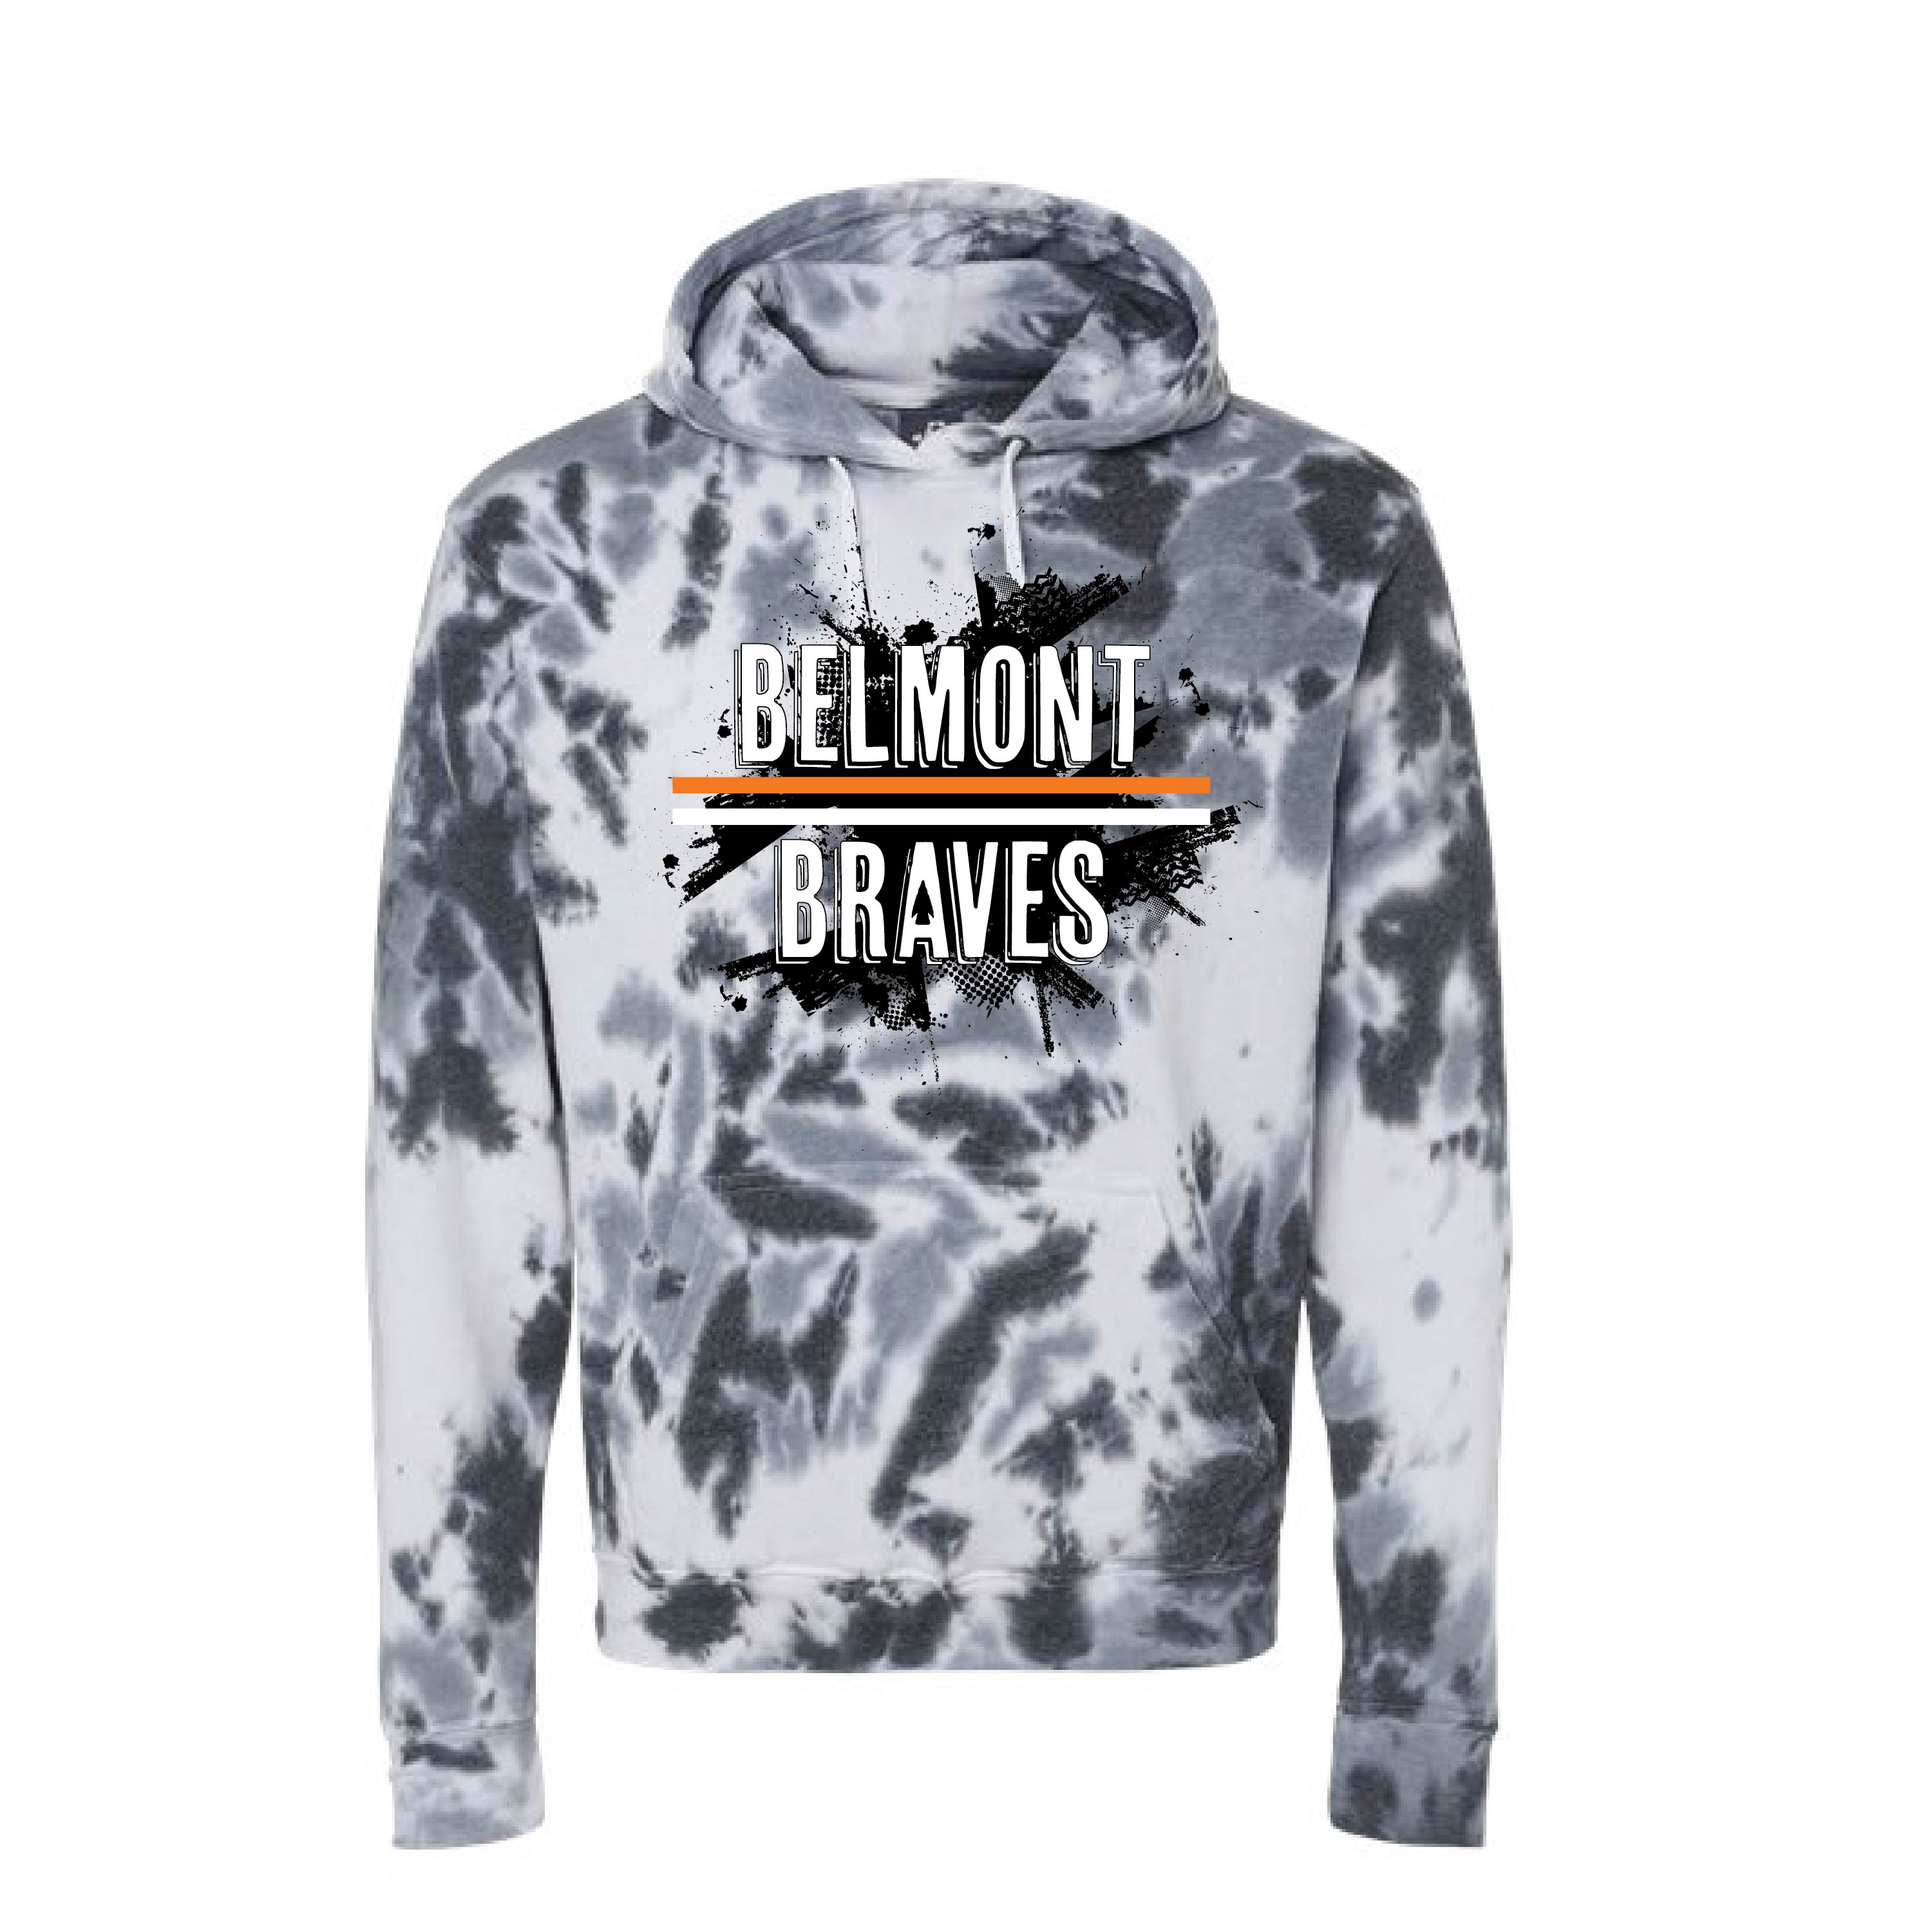 Belmont Braves Sweatshirts